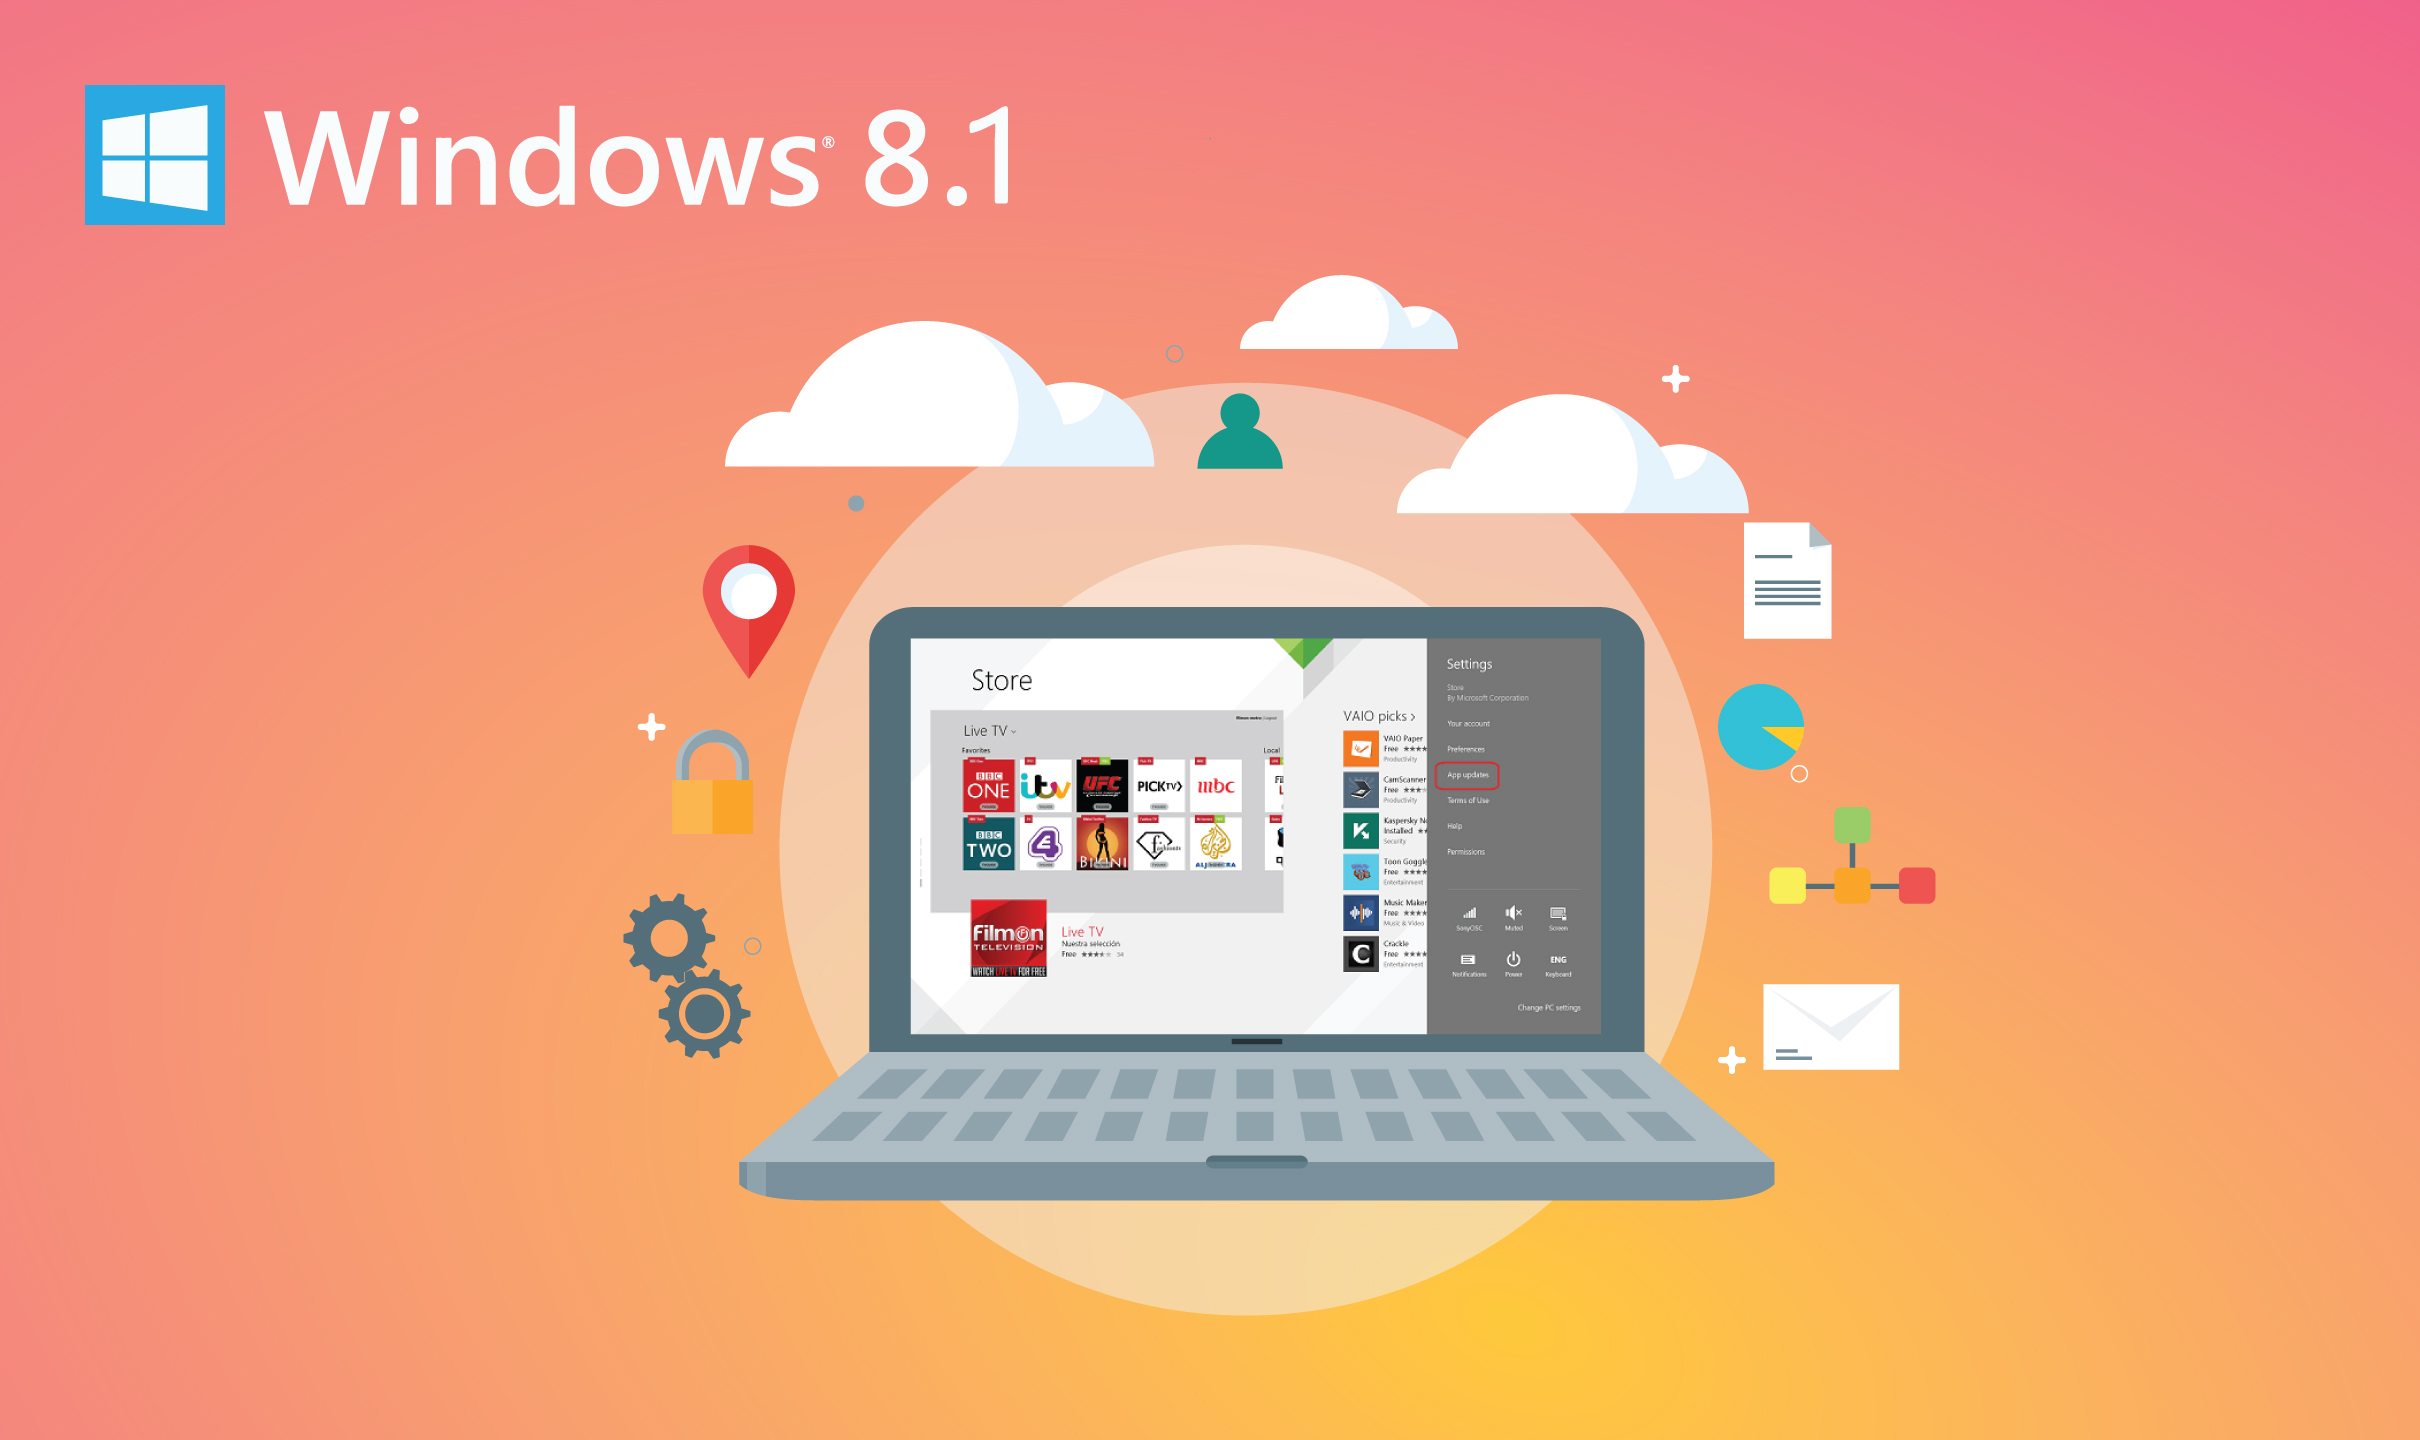 Install Windows 8.1 Pro